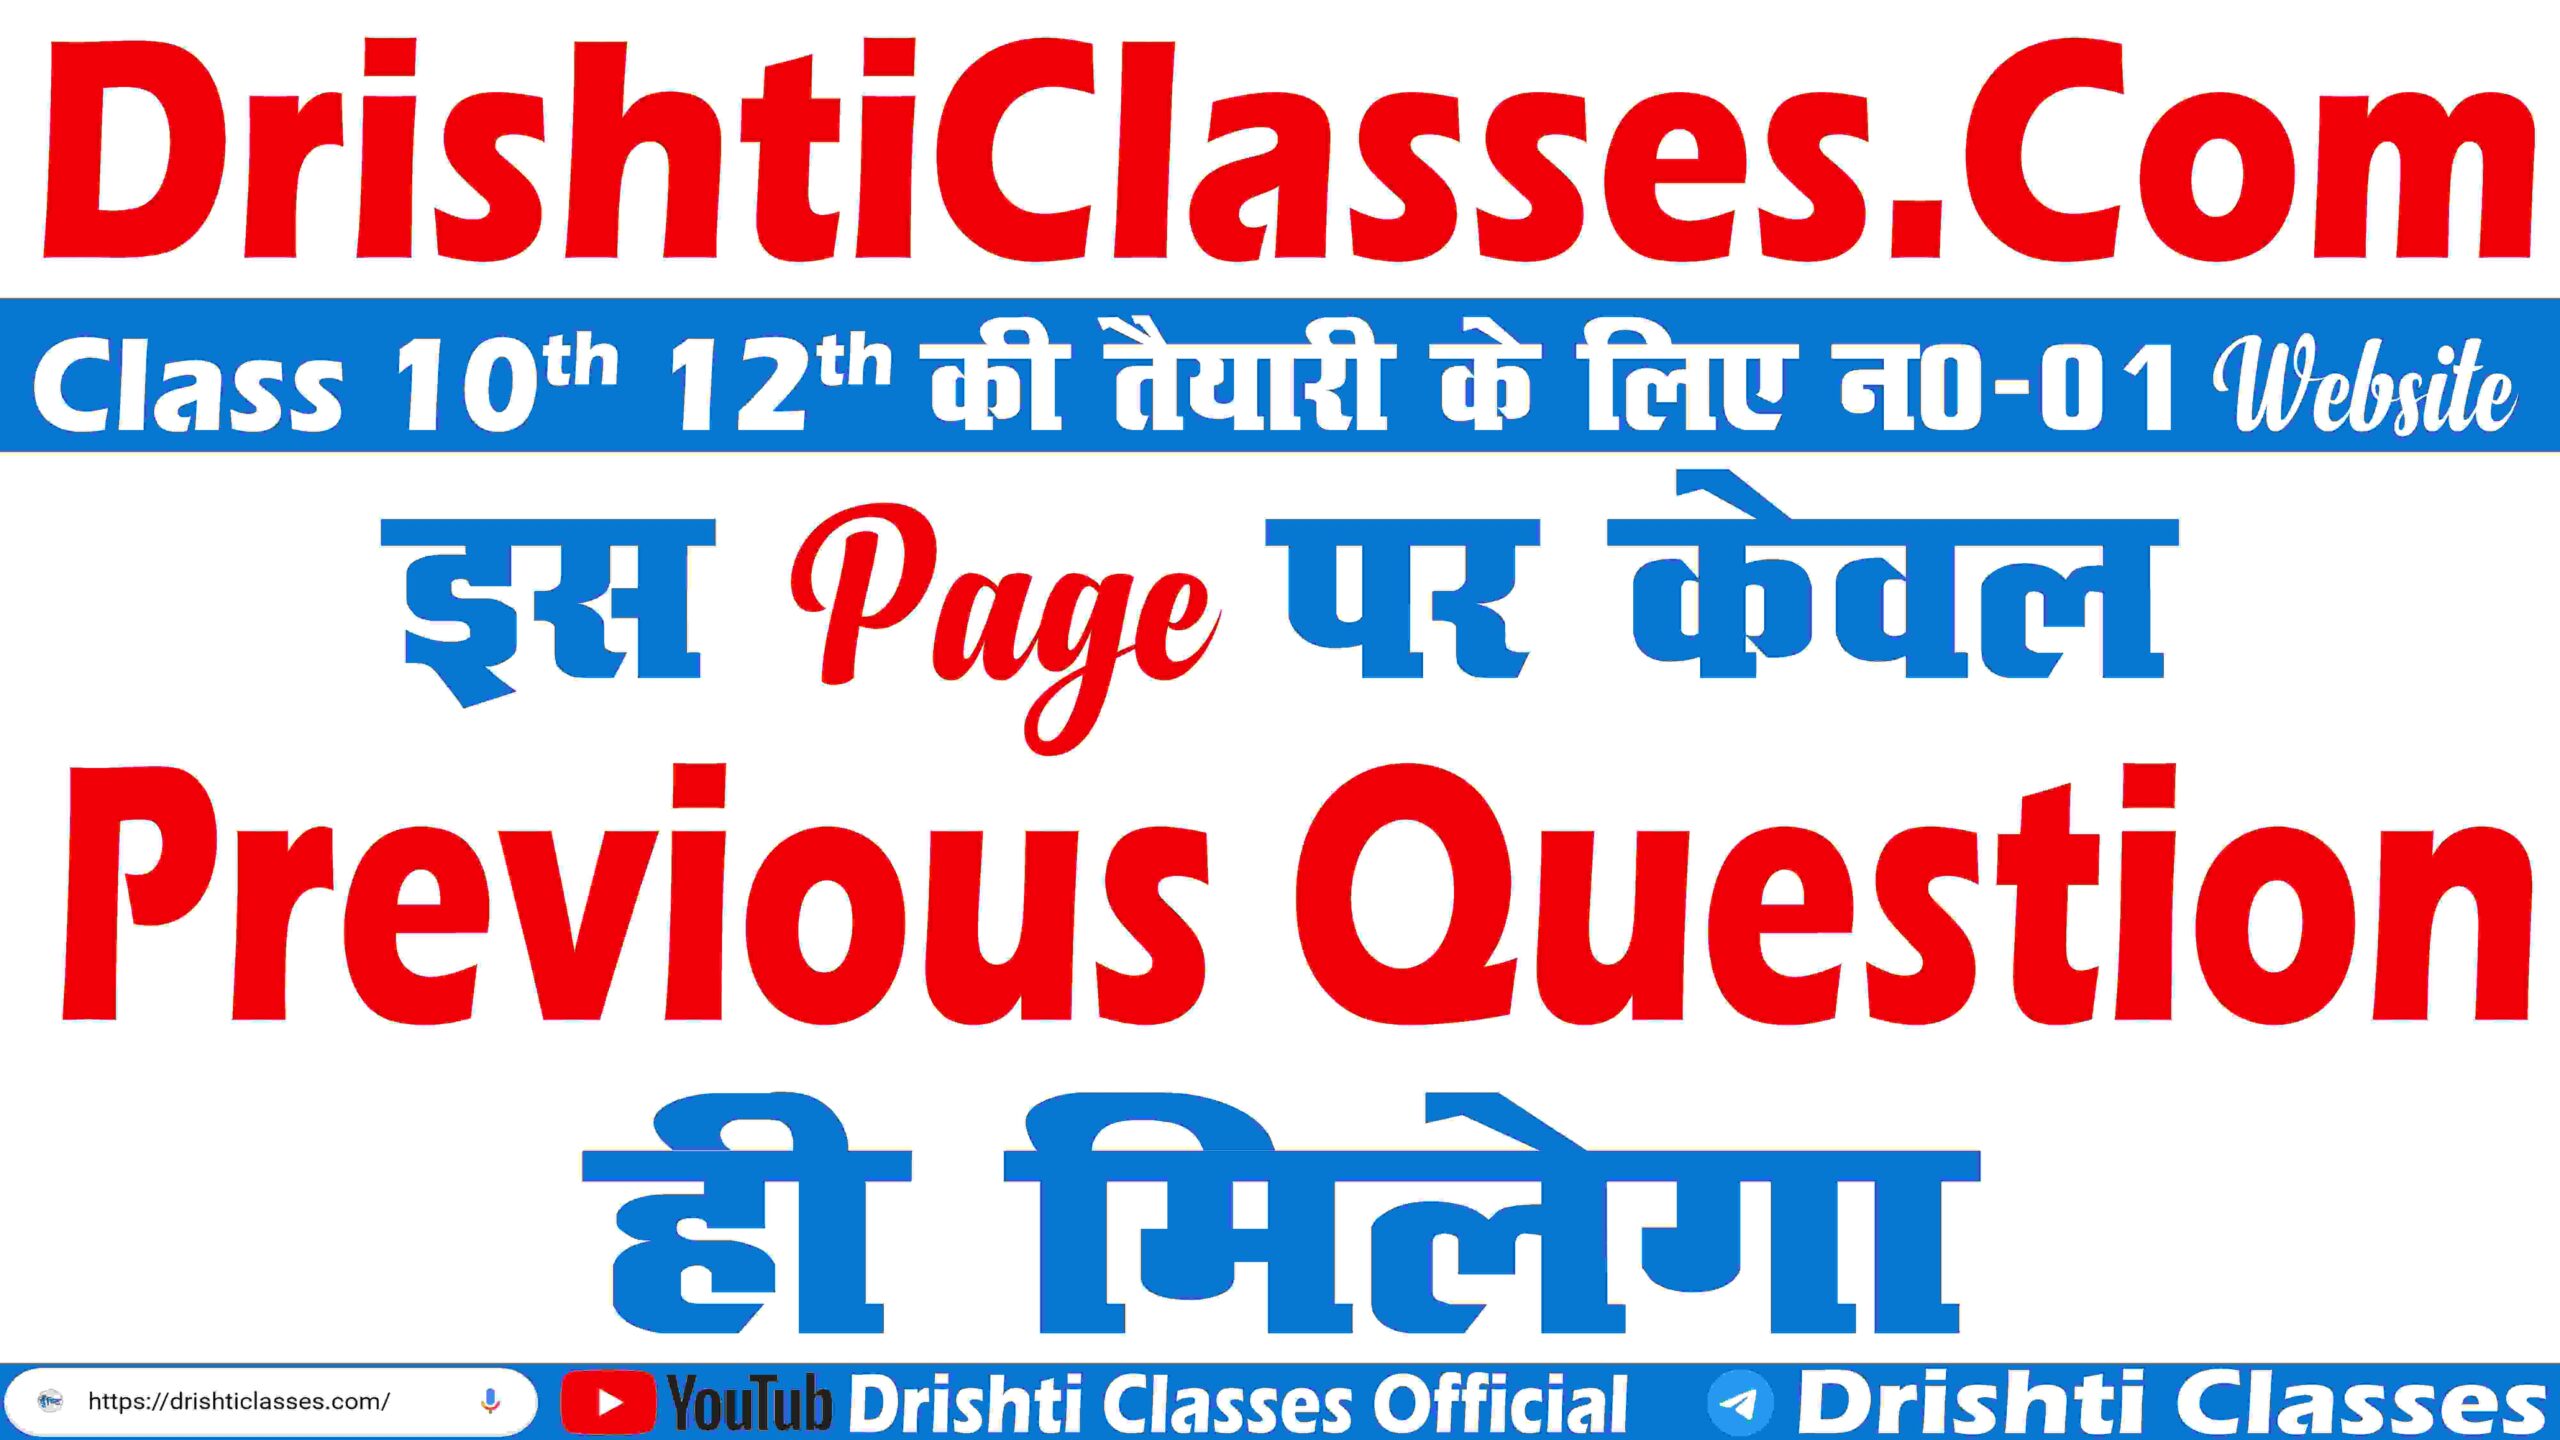 Class 10th Bihar Board Previous Question Subject List